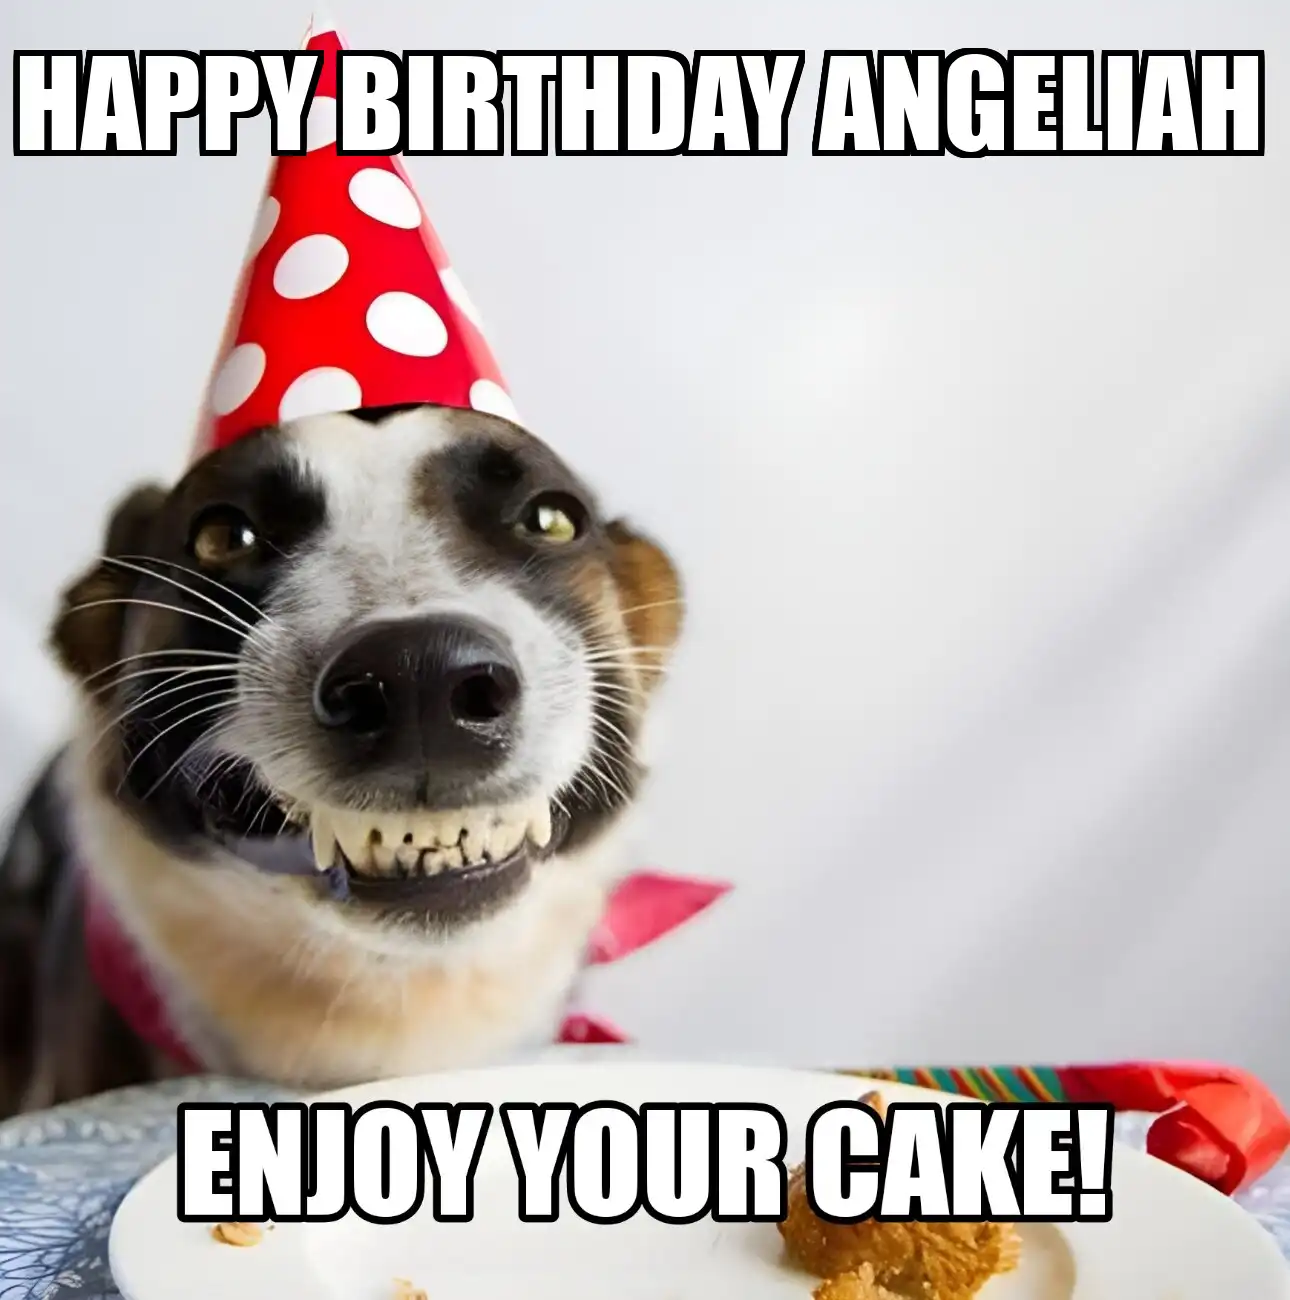 Happy Birthday Angeliah Enjoy Your Cake Dog Meme